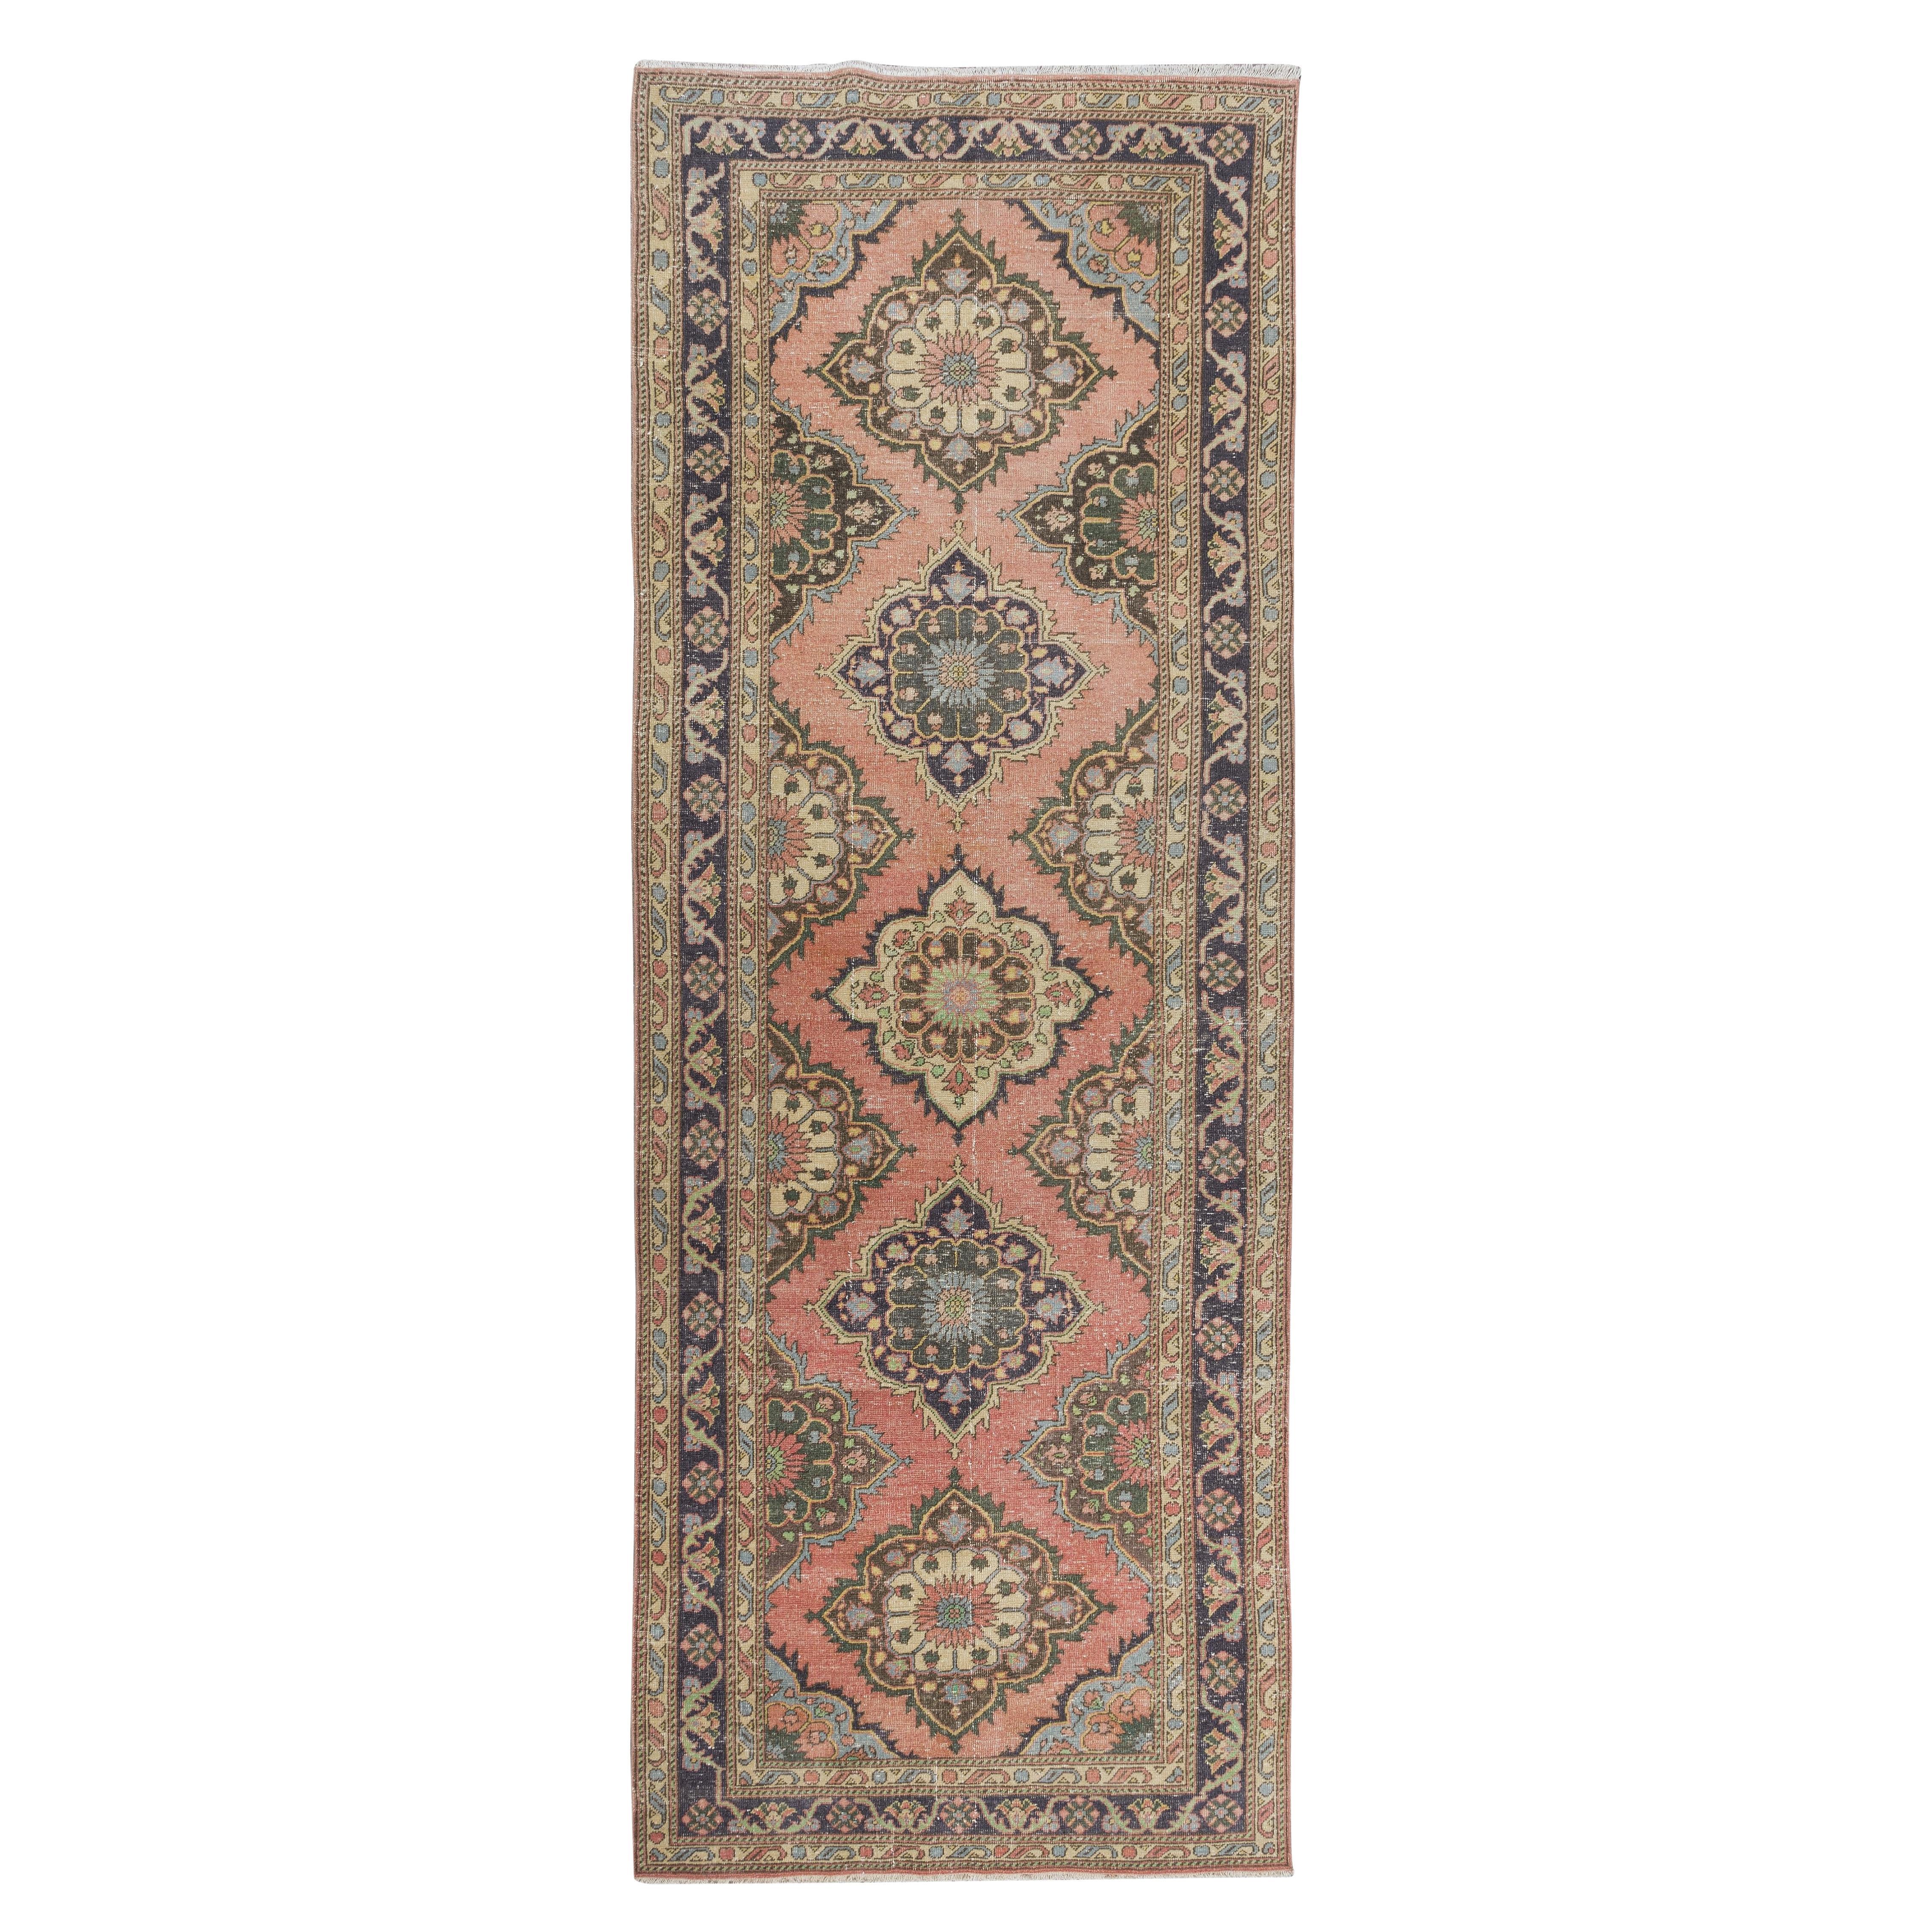 4.8x13 Ft Traditional Vintage Handmade Turkish Wool Runner Rug for Hallway